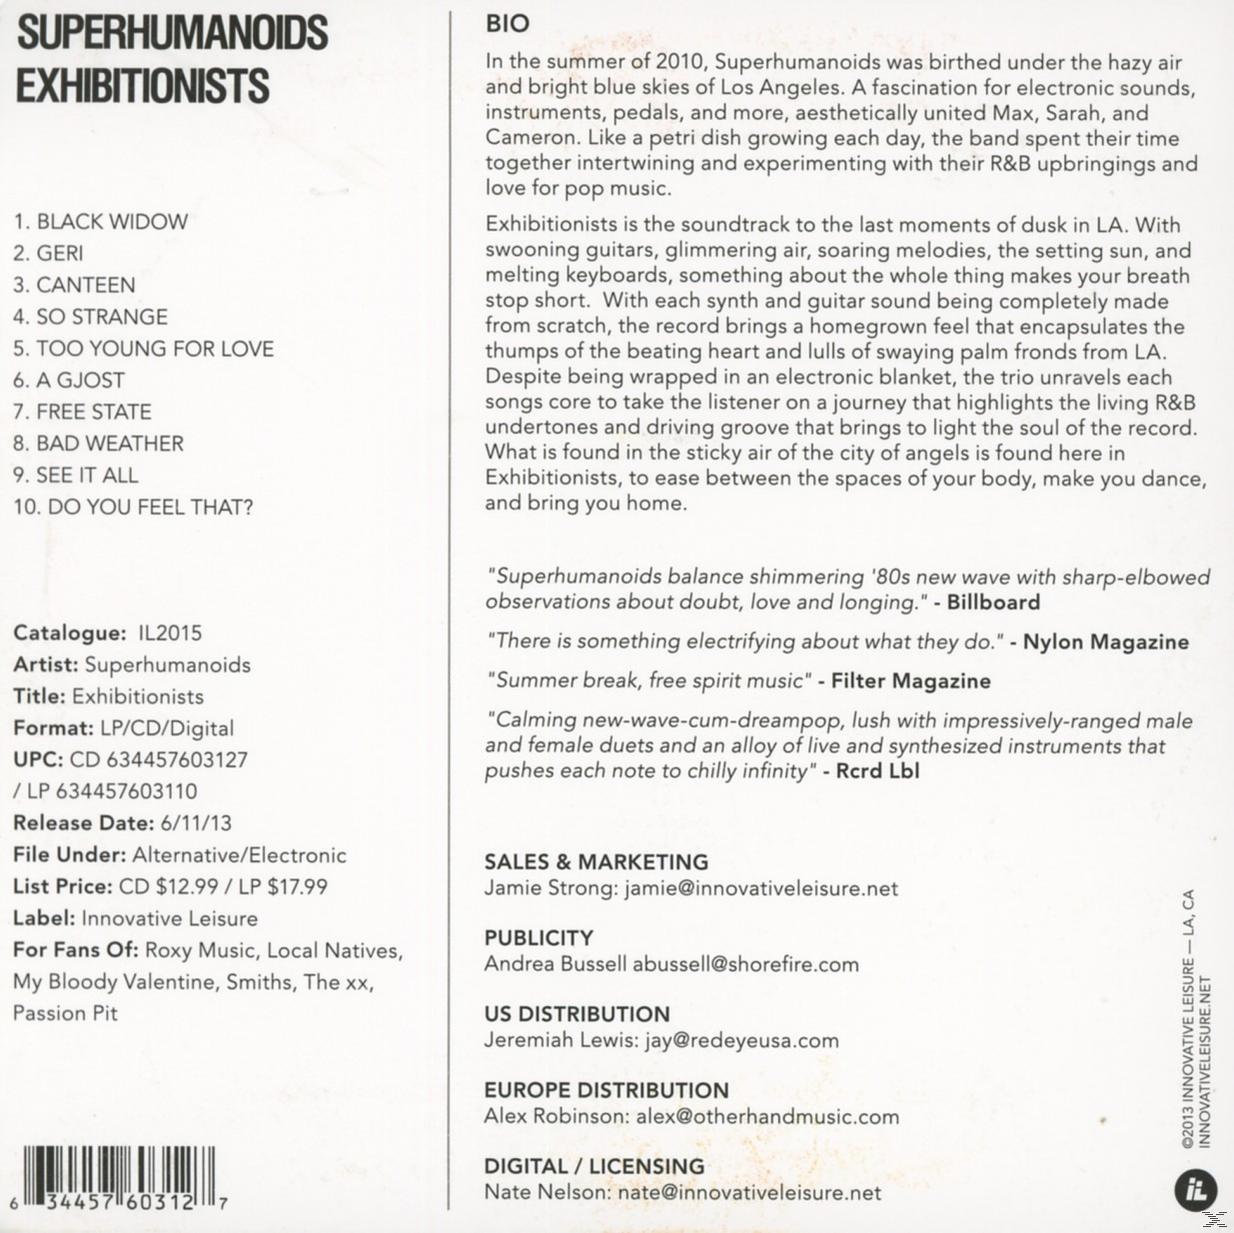 Superhumanoids - (CD) - Exhibitionists